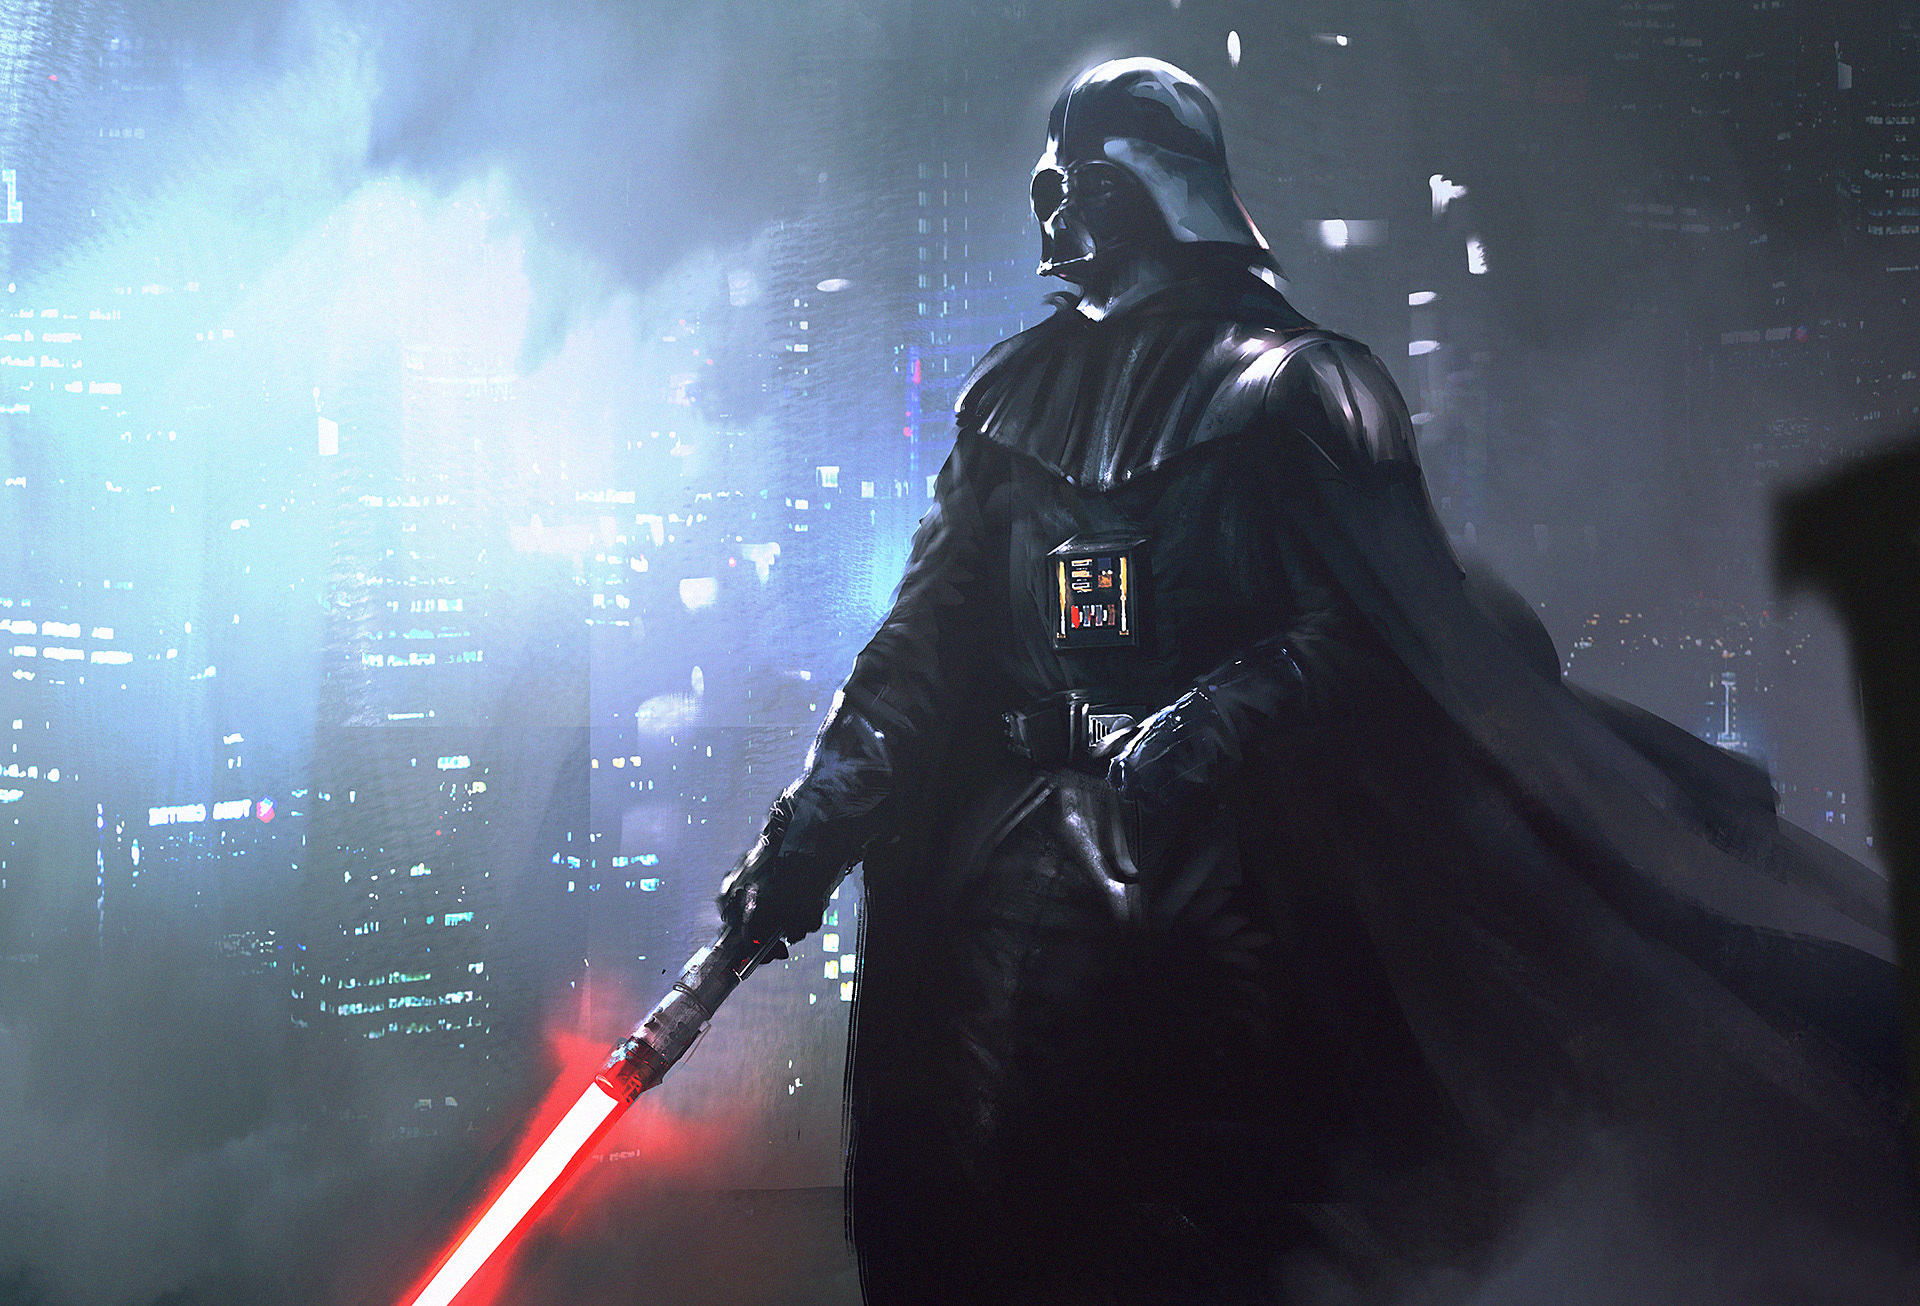 Darth Vader vs Obi Wan  Ahsoka  Luke wallpaper  rStarWarsArt